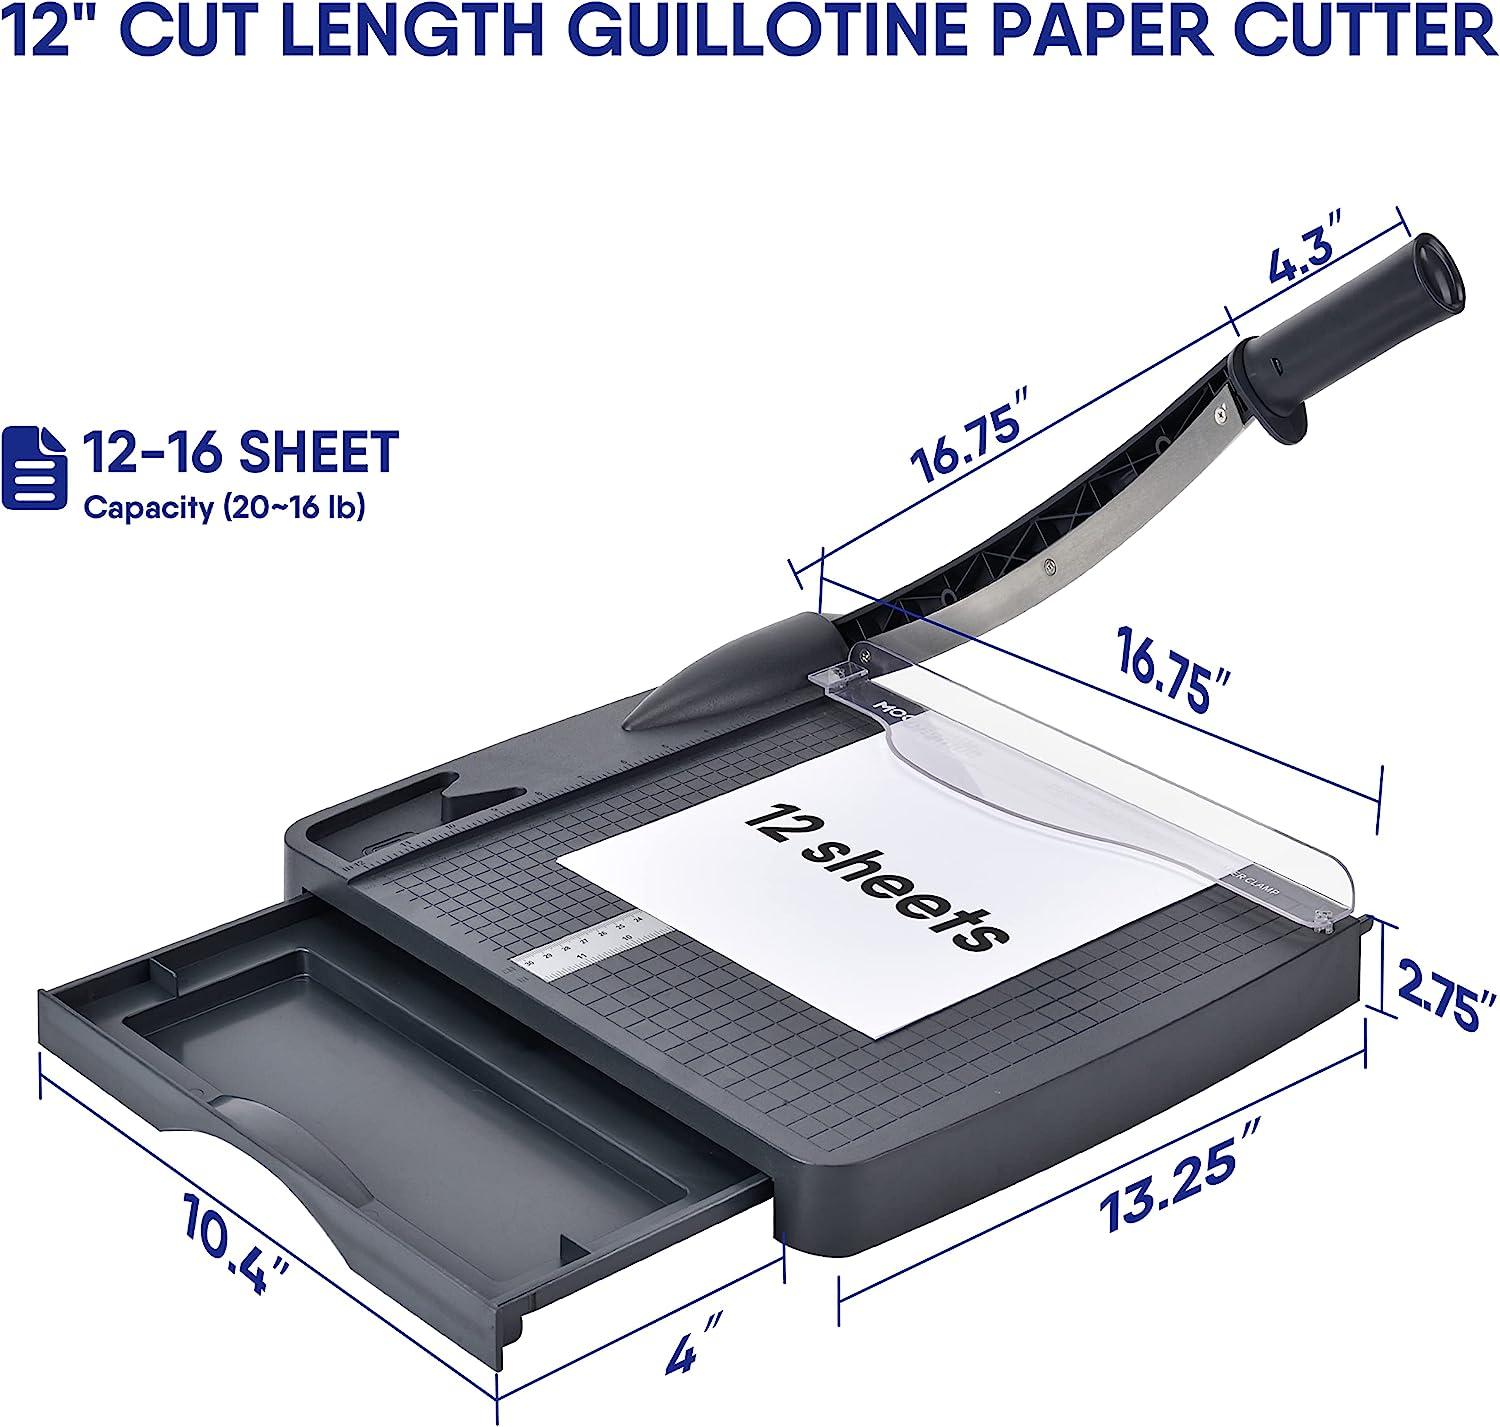 Guillotine Paper Trimmer, Heavy Duty Cutter, Guillotine Cutter, 12